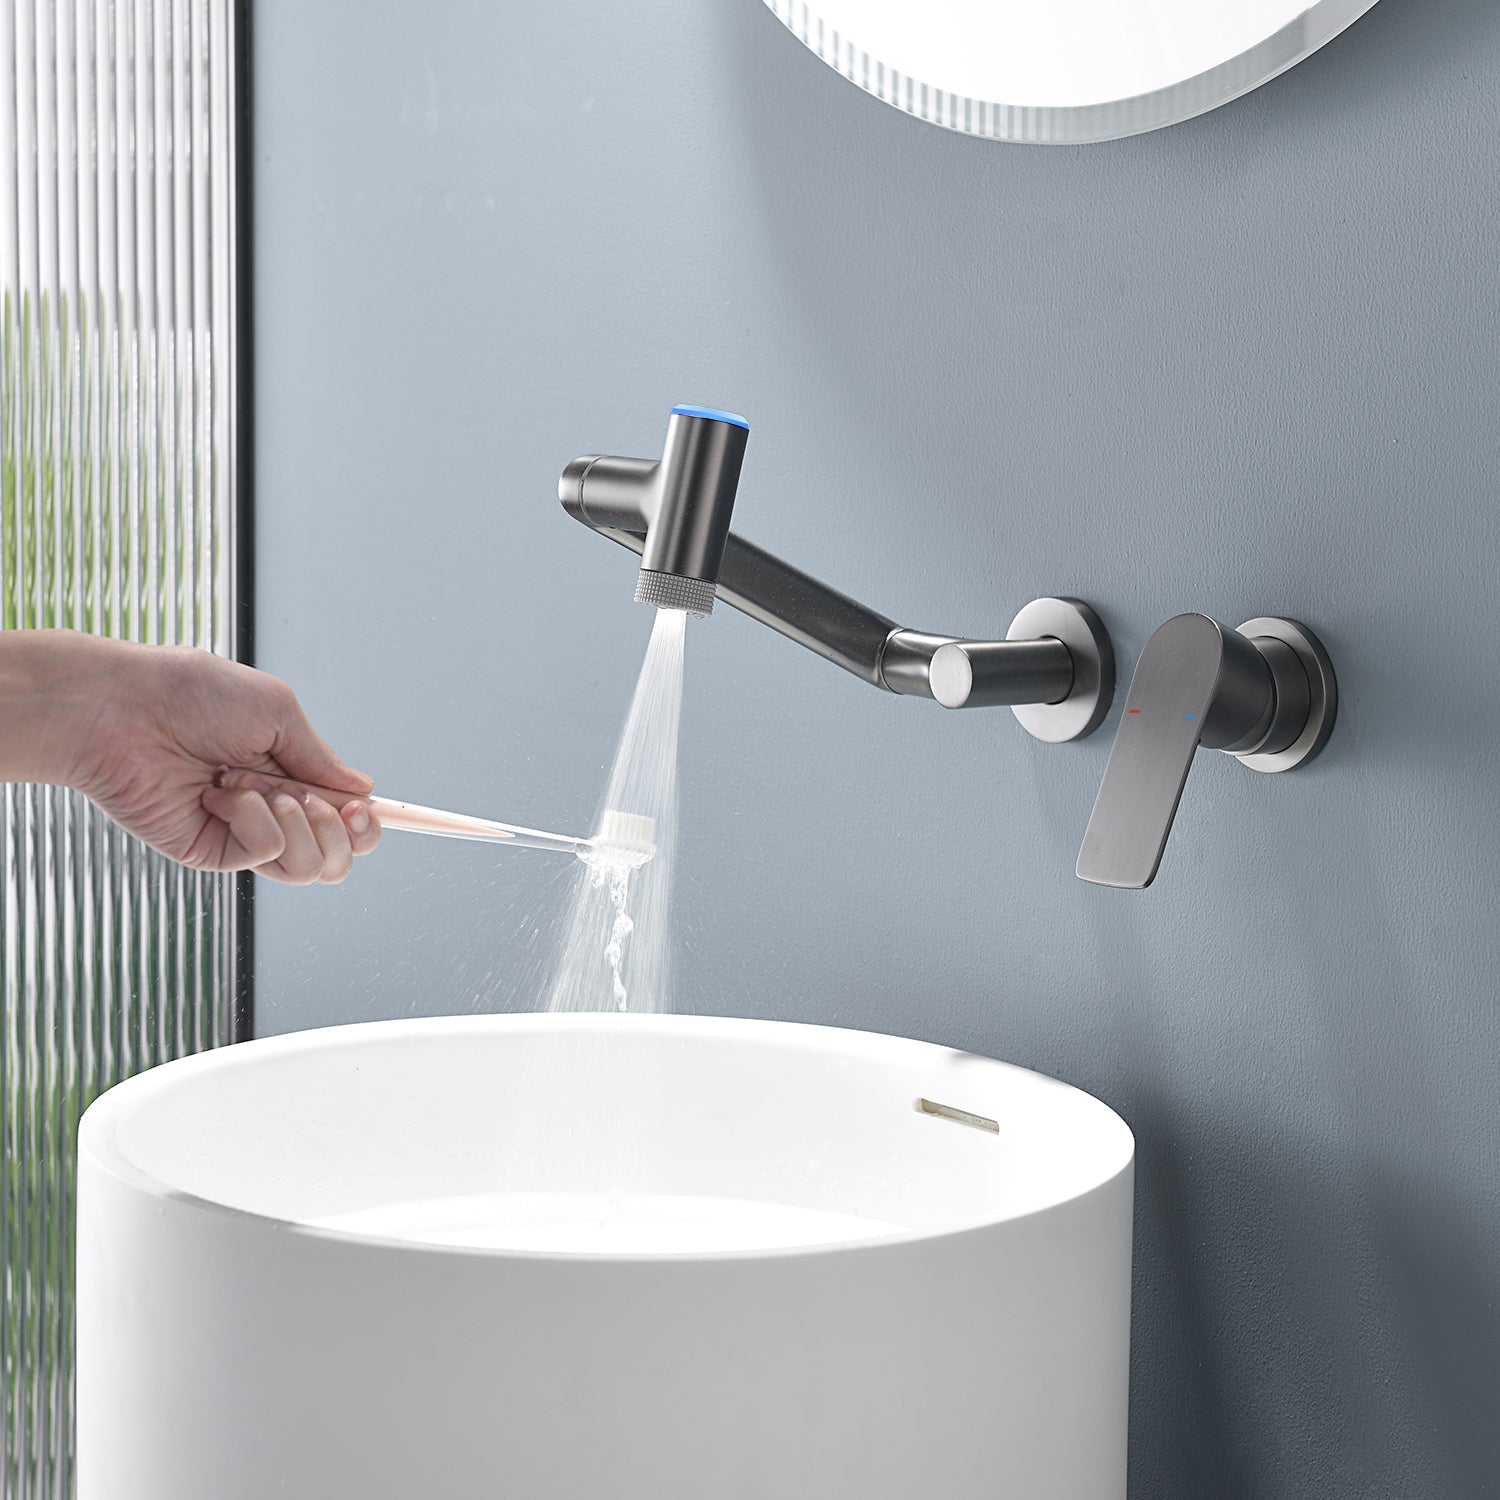 Lefton Single-Handle Wall Mount Bathroom Faucet with Temperature Display-BFWM2401 -Bathroom Faucets- Lefton Home